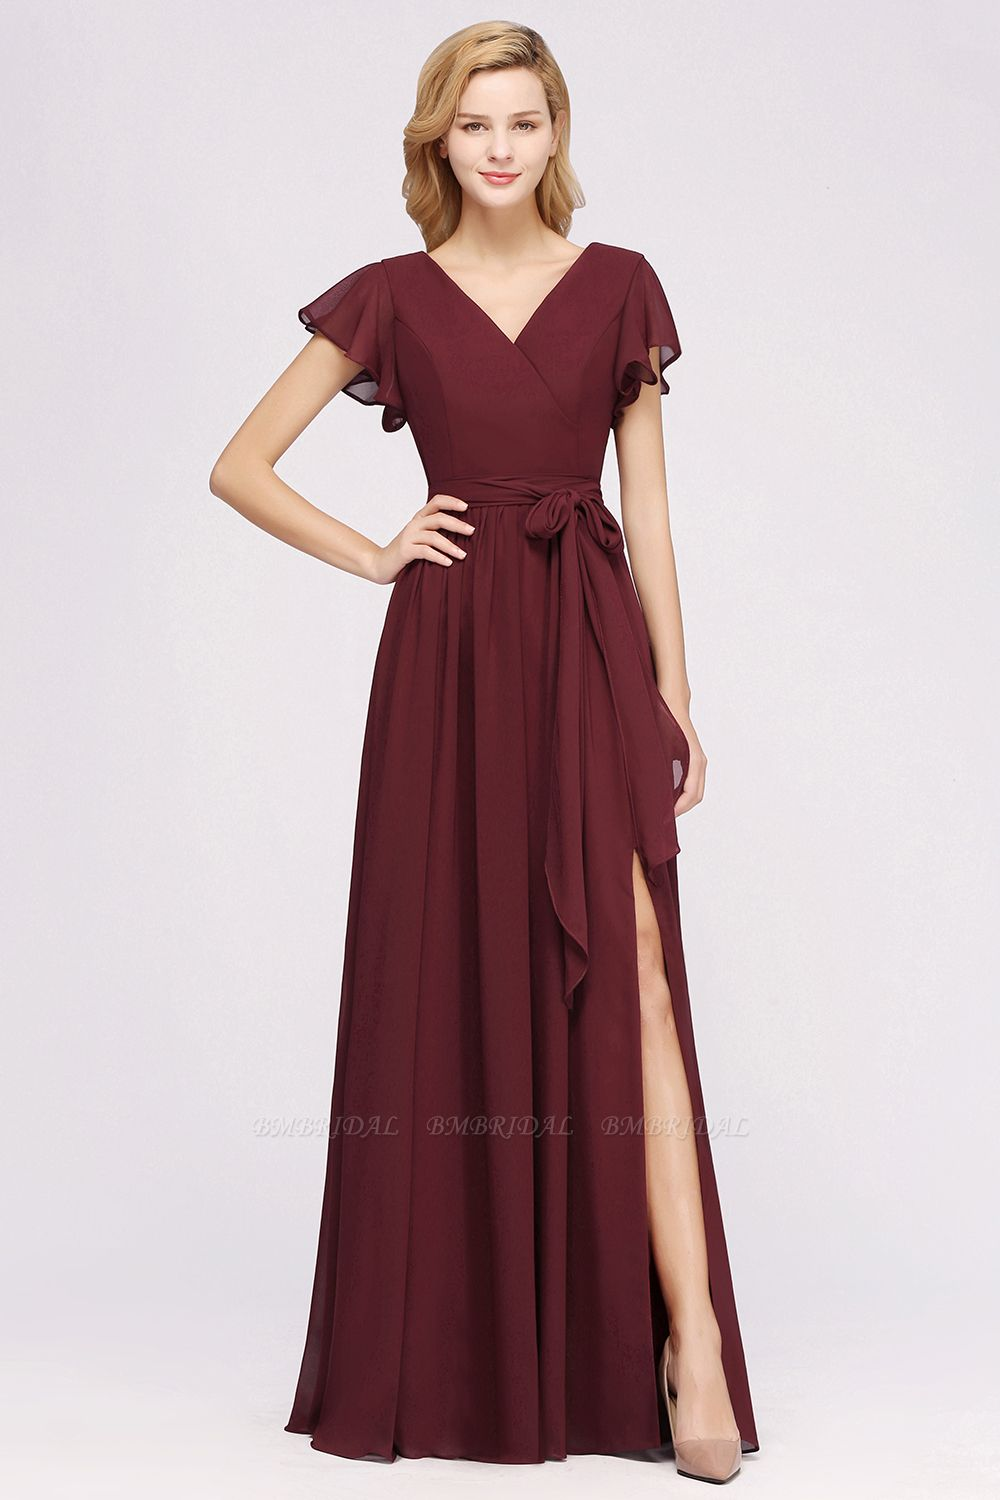 V-Neck Short-Sleeves Bridesmaid Dress -   18 soiree dress Plus Size ideas